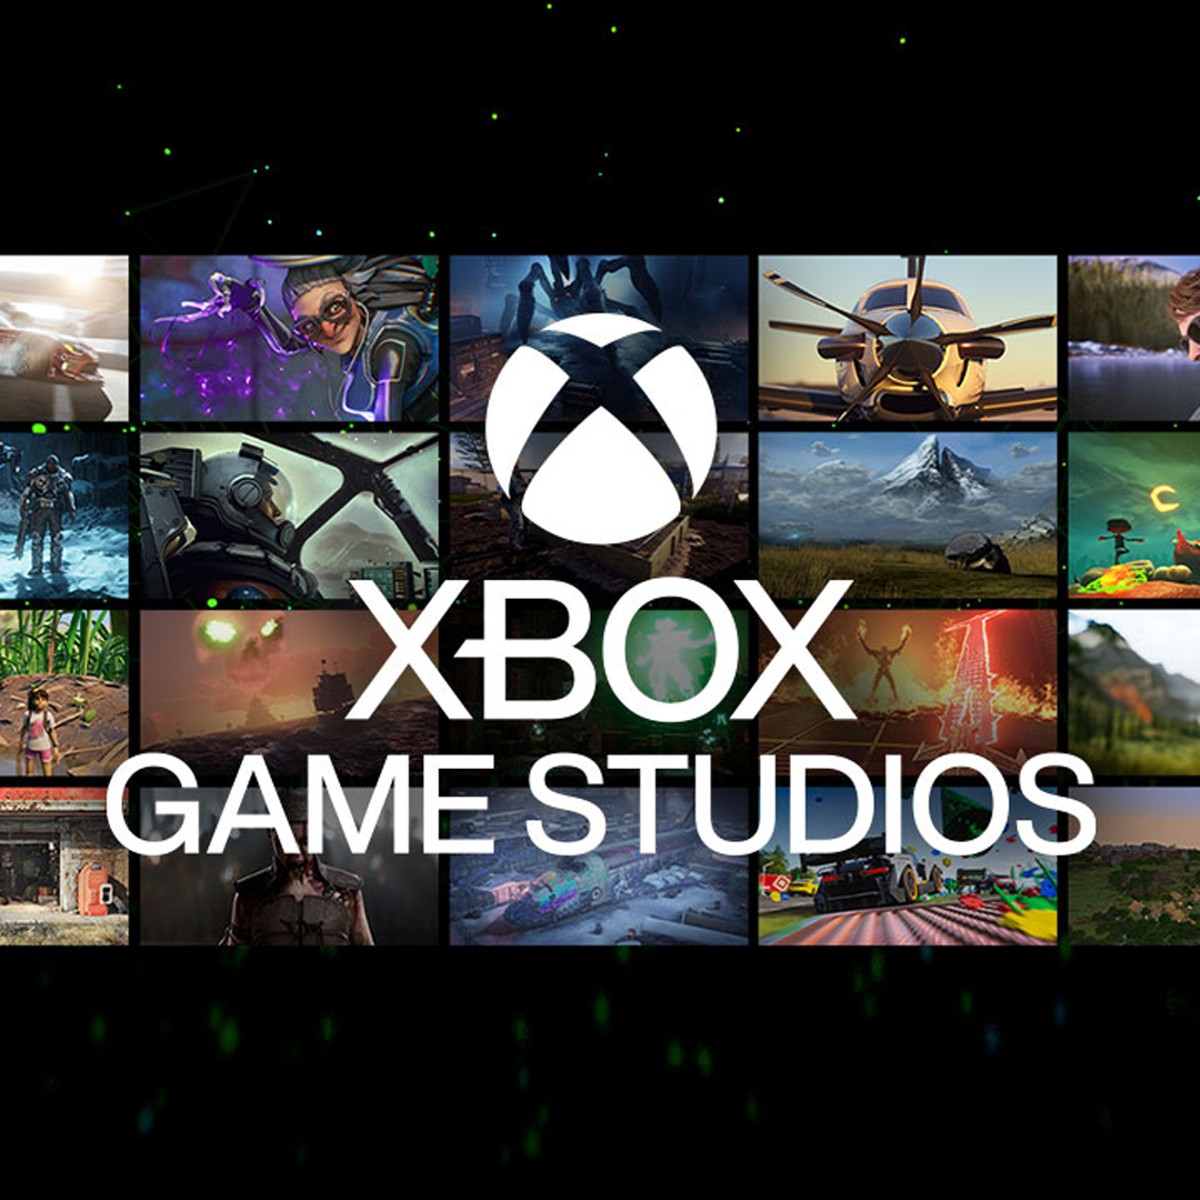 Xbox Game Studios has over a dozen games in development